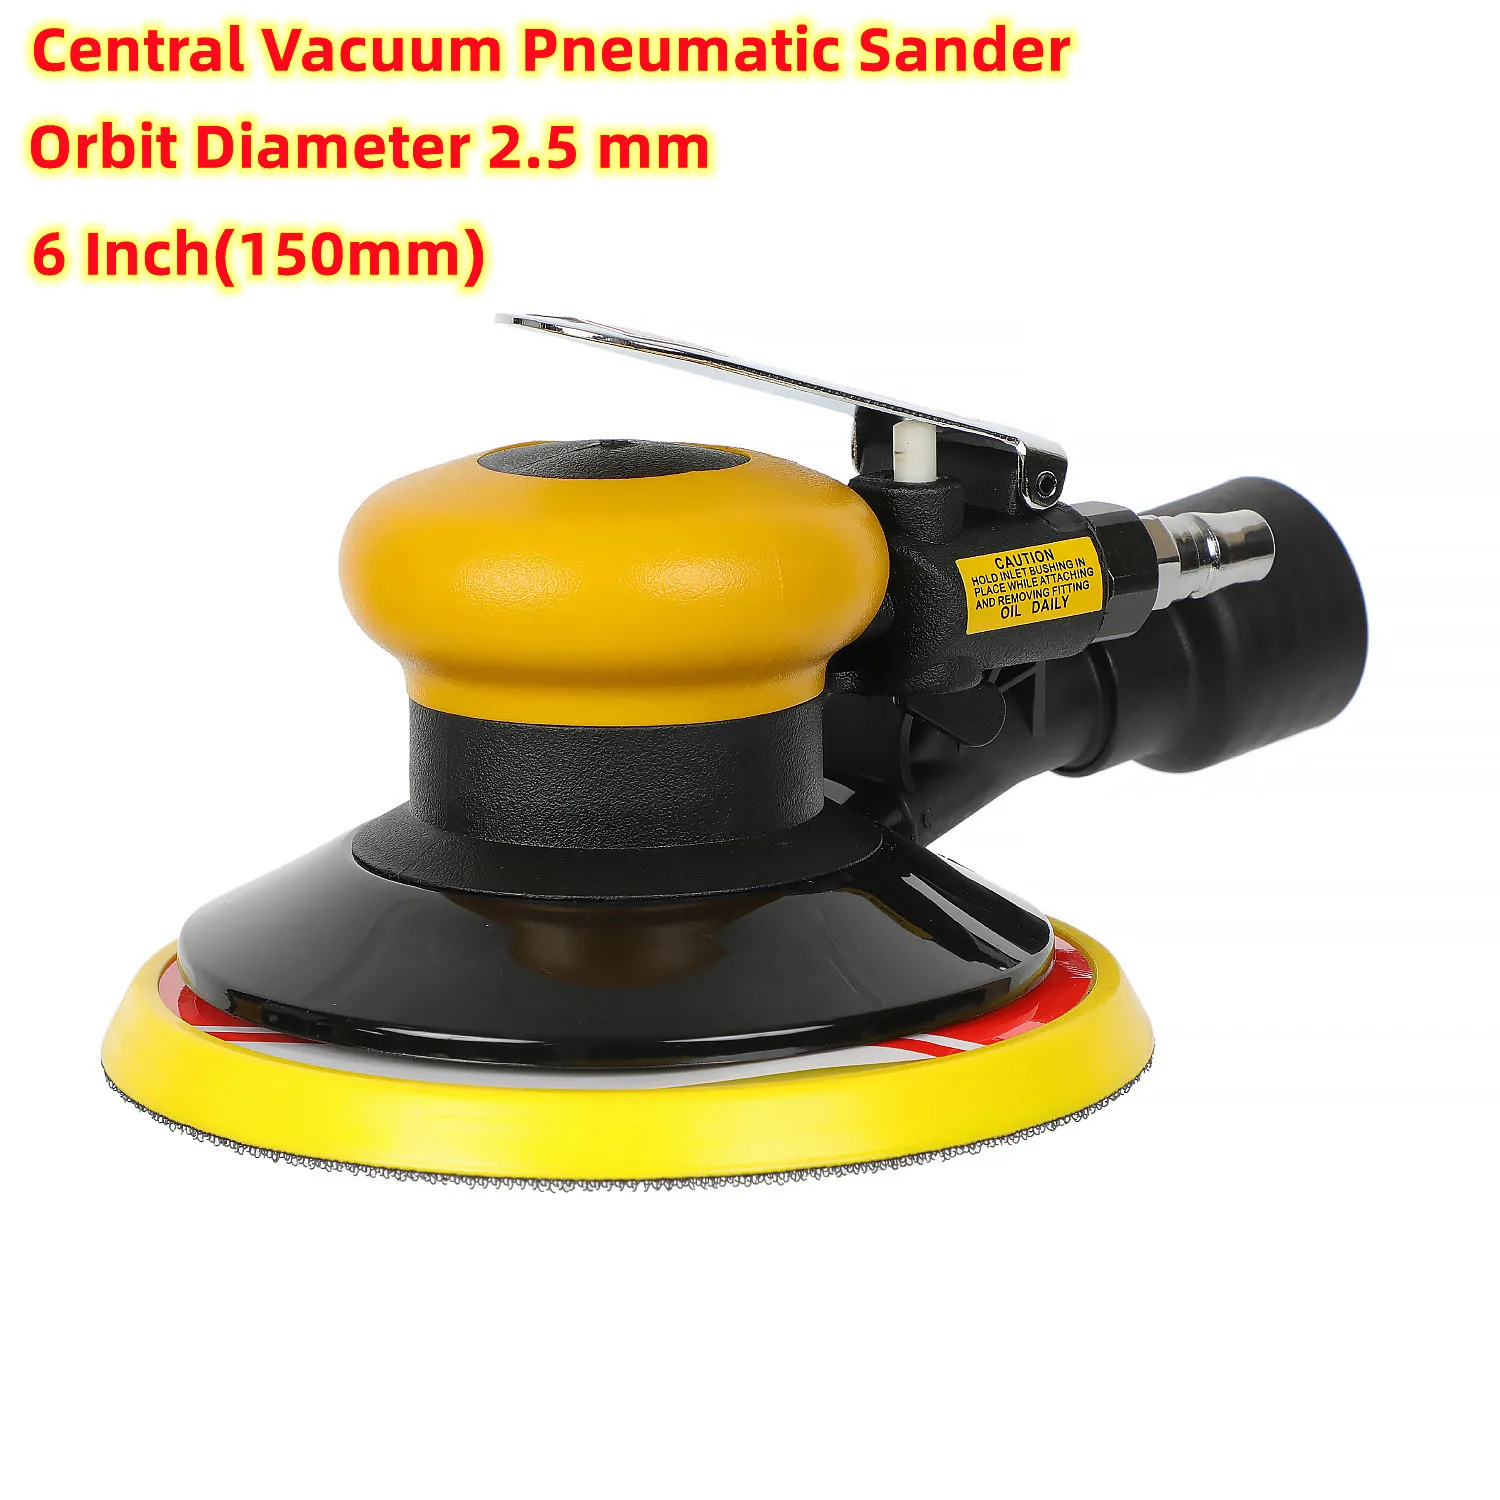 6 Inch(150mm) Orbit Diameter 2.5 mm Air Random Orbital Sander,Center-Vacuum Pneumatic Grinder,Polishing Machine,Pneumatic Tools